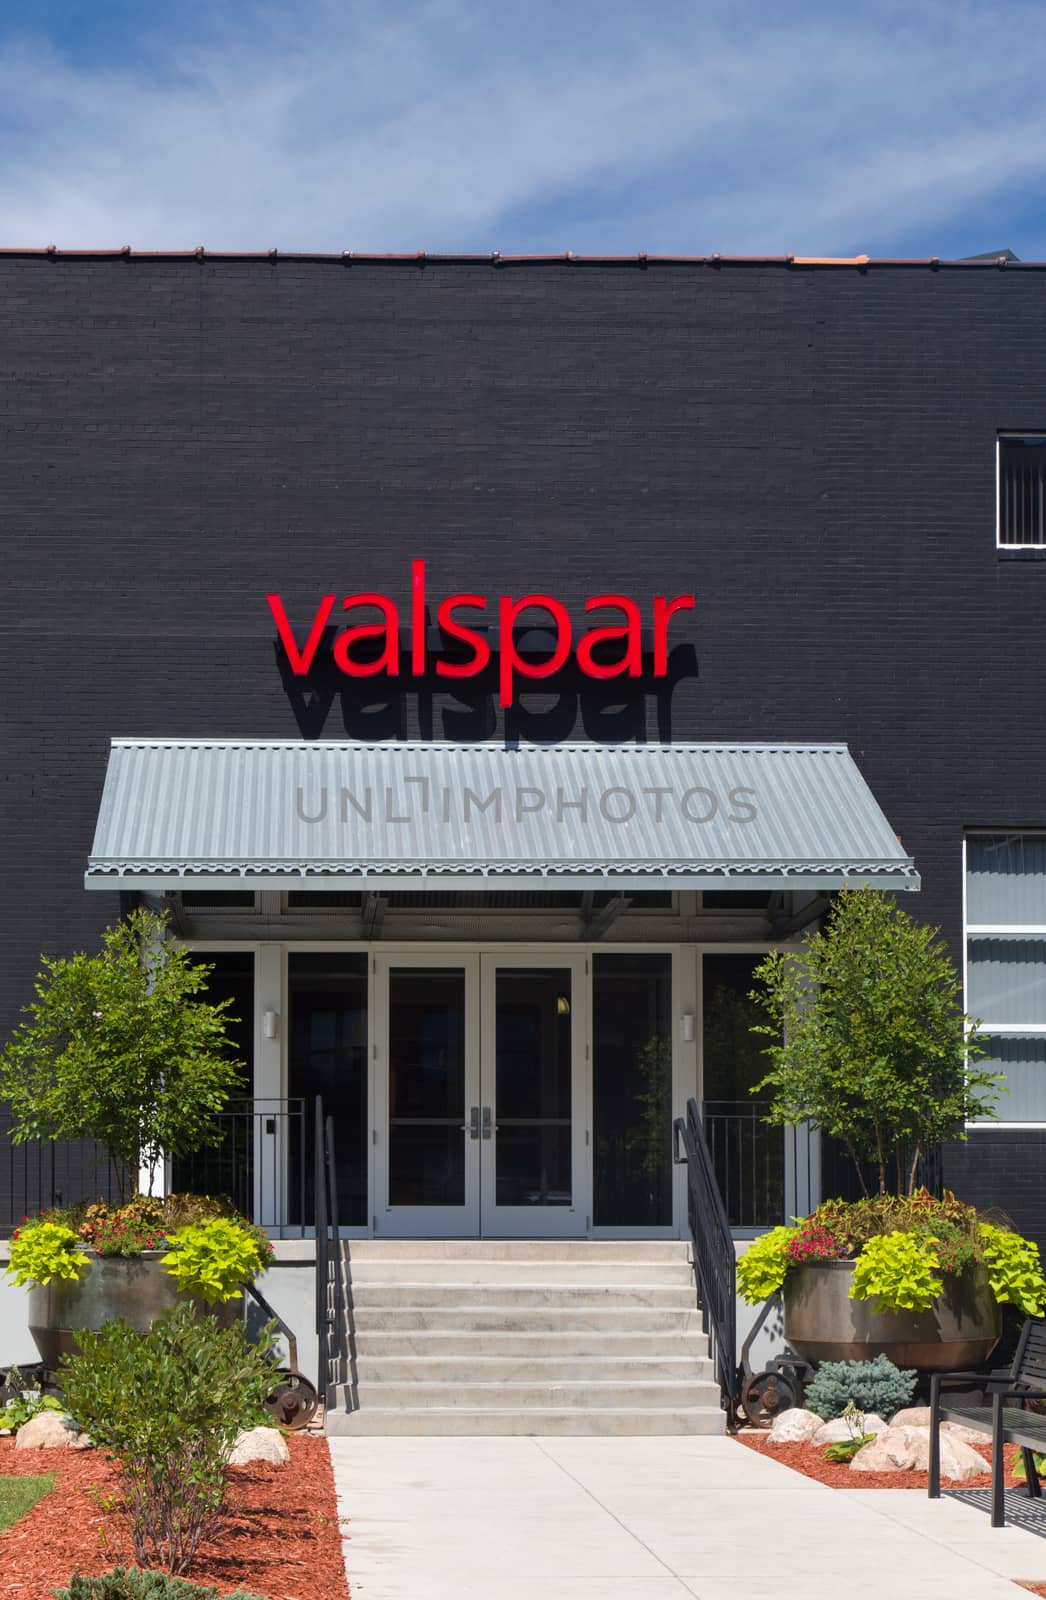 Valspar Corporate Headquarters Building by wolterk